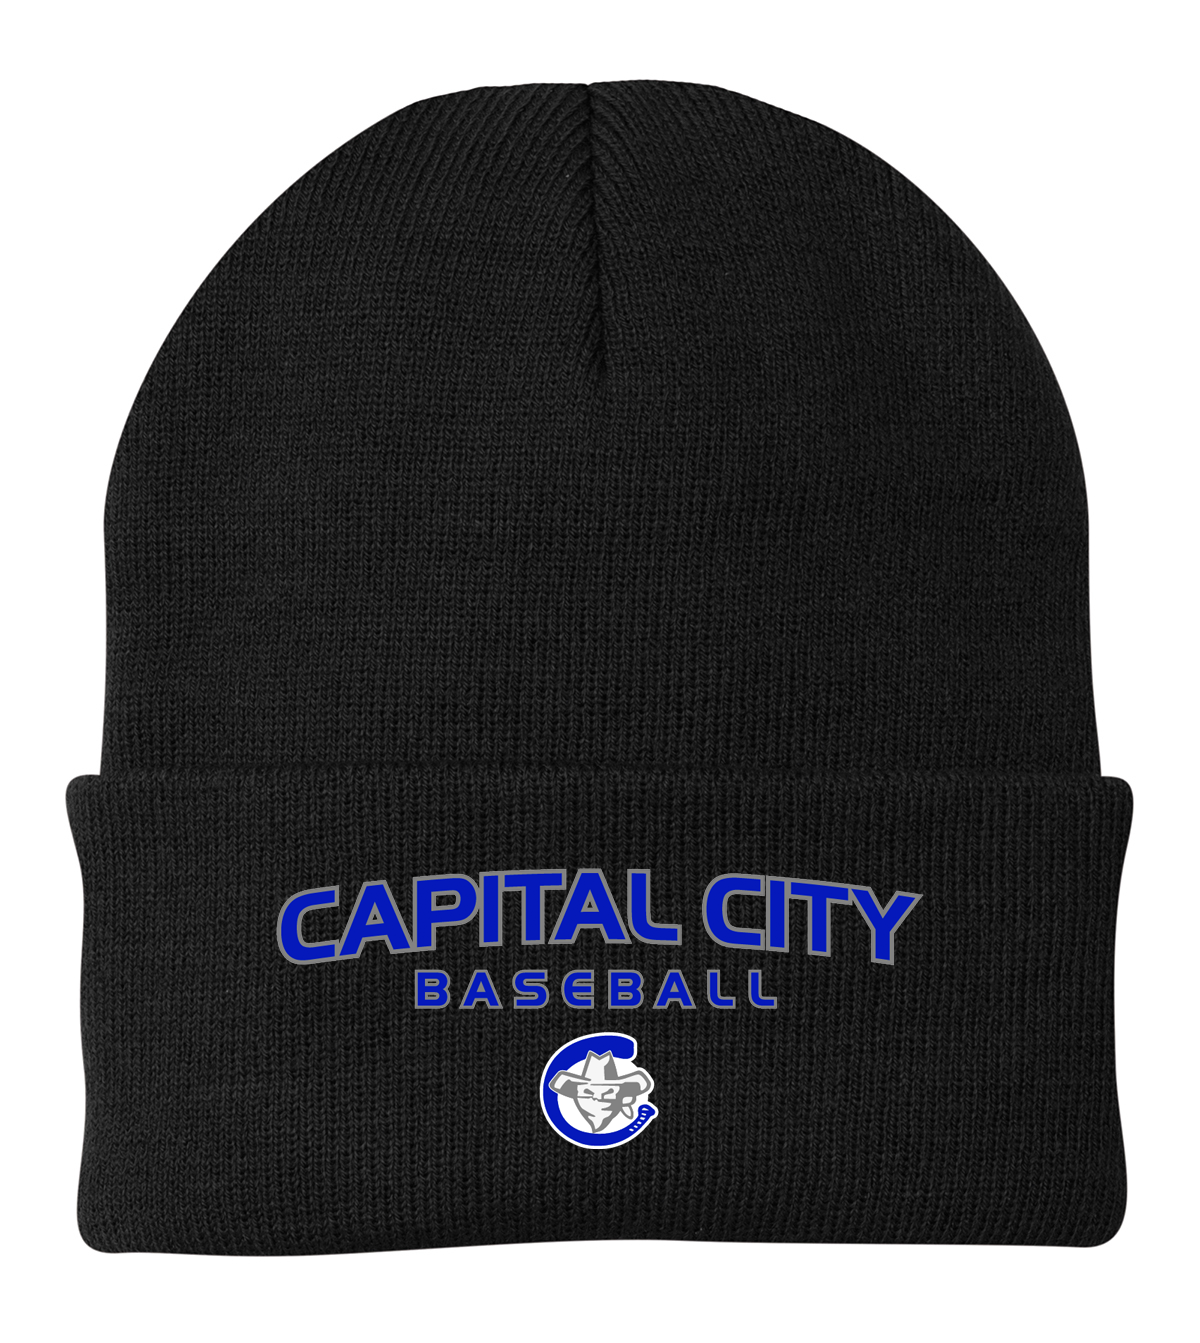 Capital City Baseball Knit Beanie